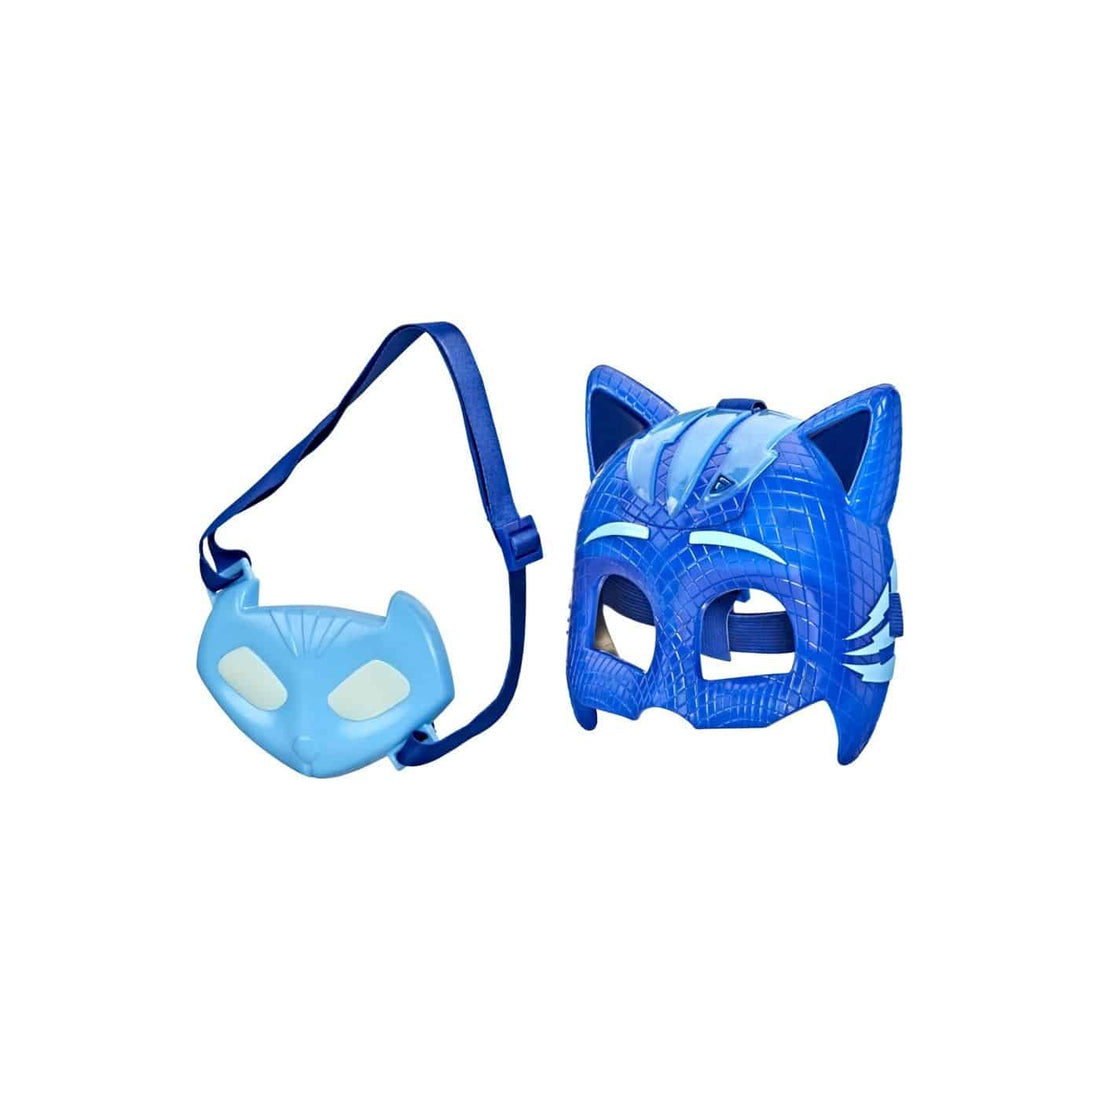 Hasbro Pj Masks Deluxe Mask Catboy